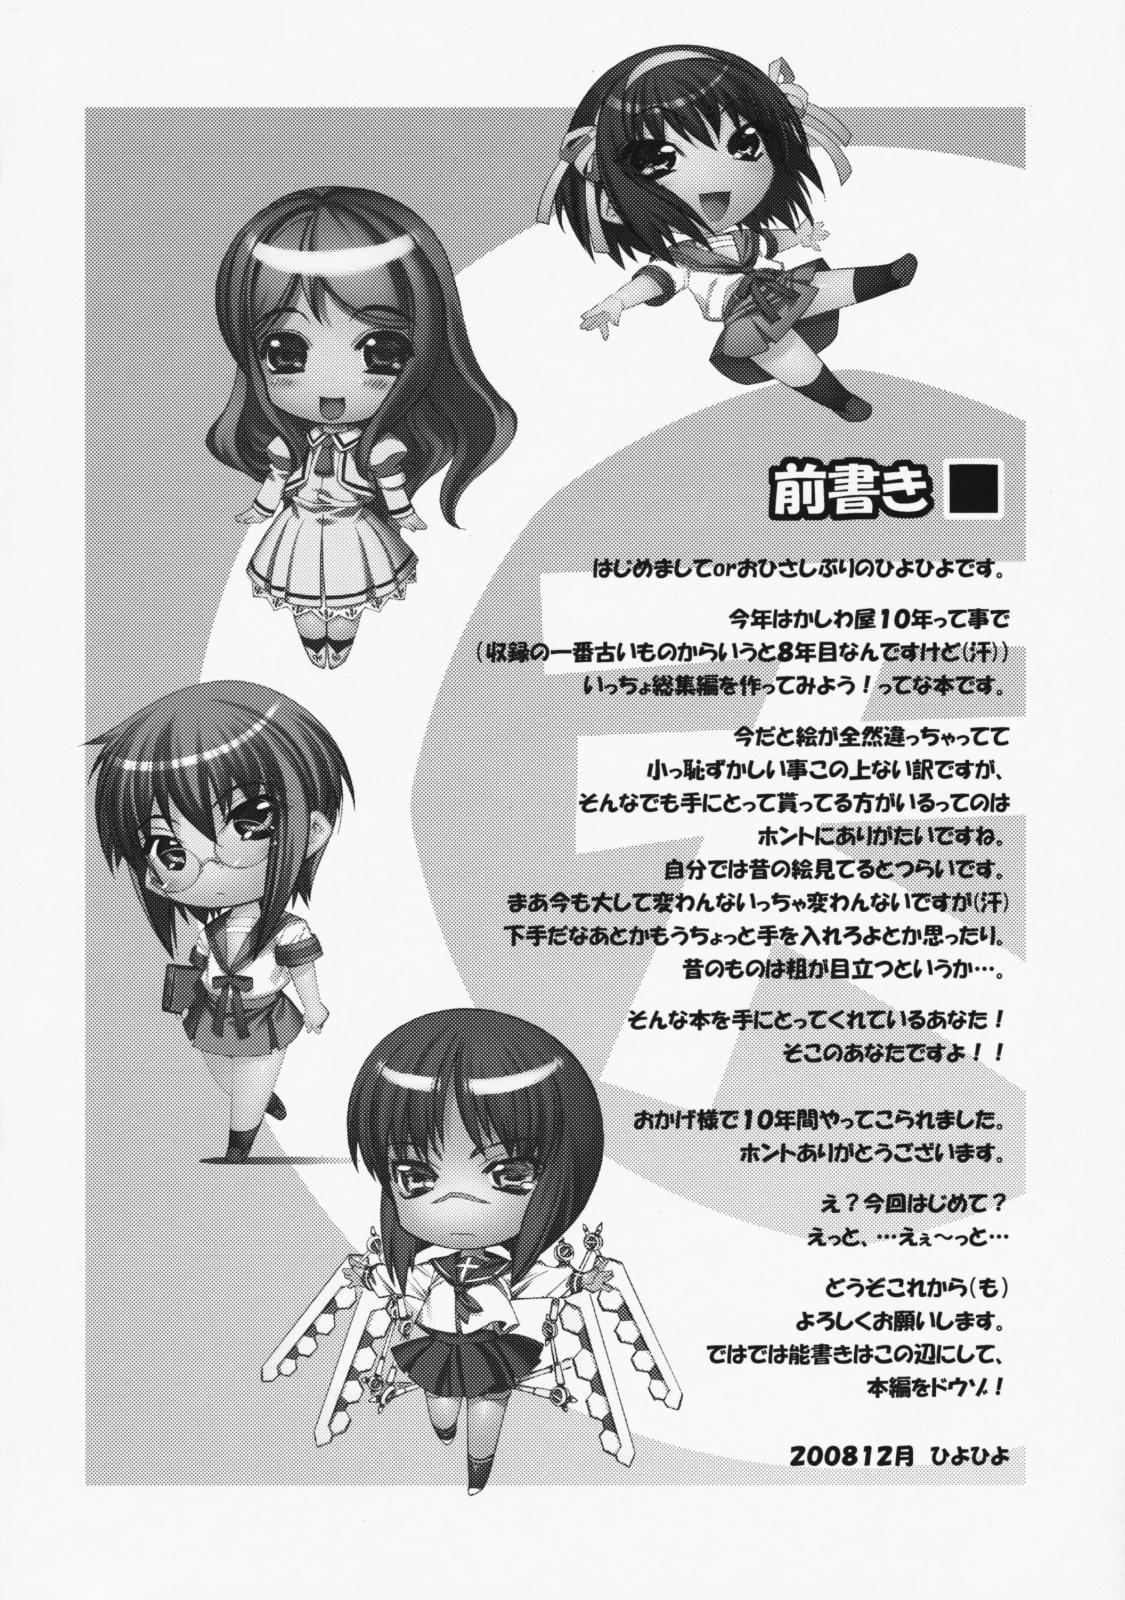 Soles Kashiwa-ya Circle 10th Anniversary - Naruto Love hina Pretty cure Busou renkin Cosmic baton girl comet-san Francaise - Page 3